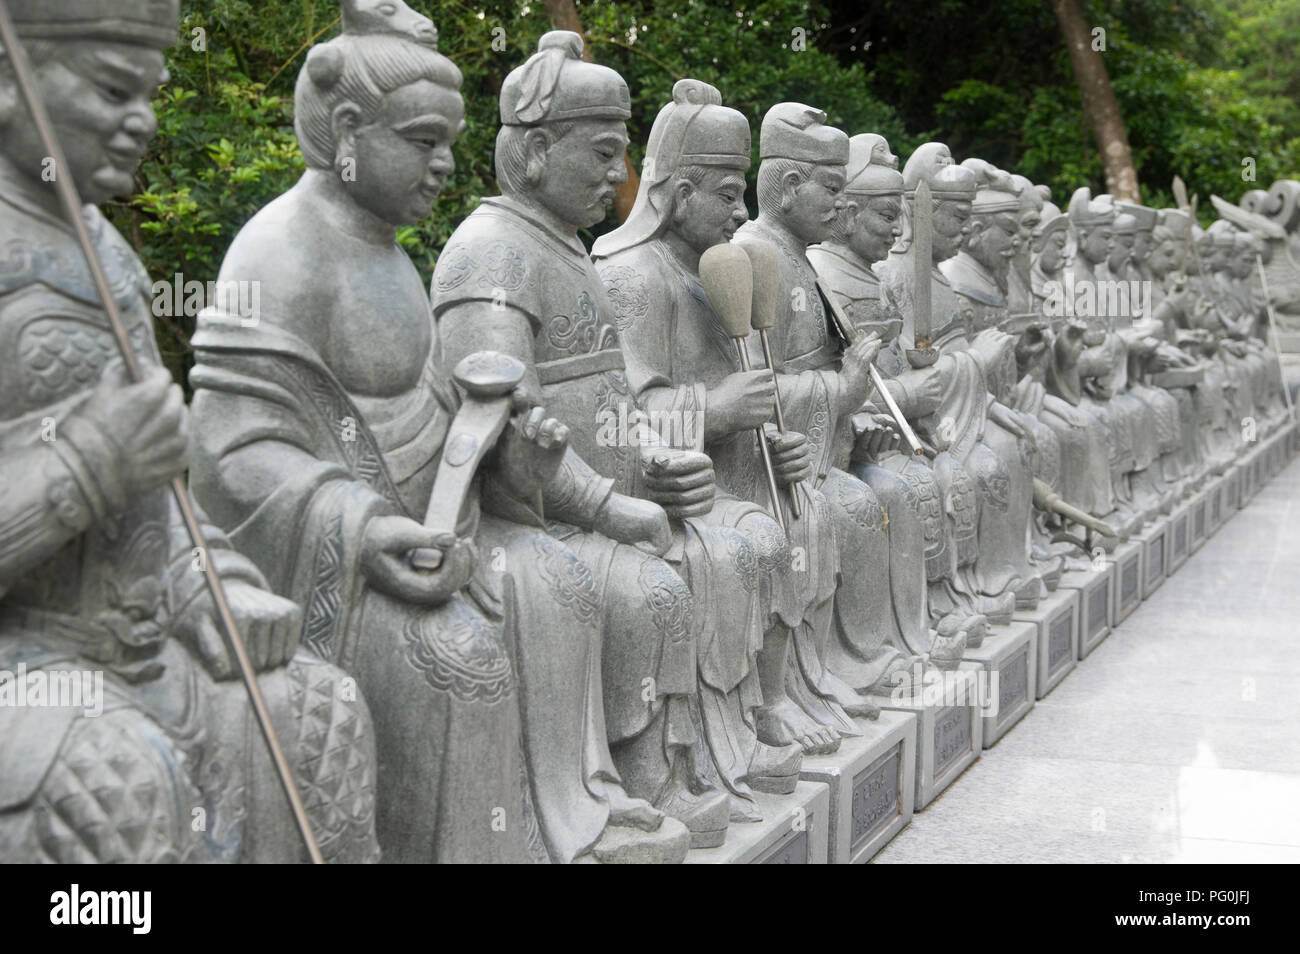 08.01.2018 Sroned statues at Ten Thousand Buddhas Monastery in Sha Tin, Hong Kong, China Stock Photo